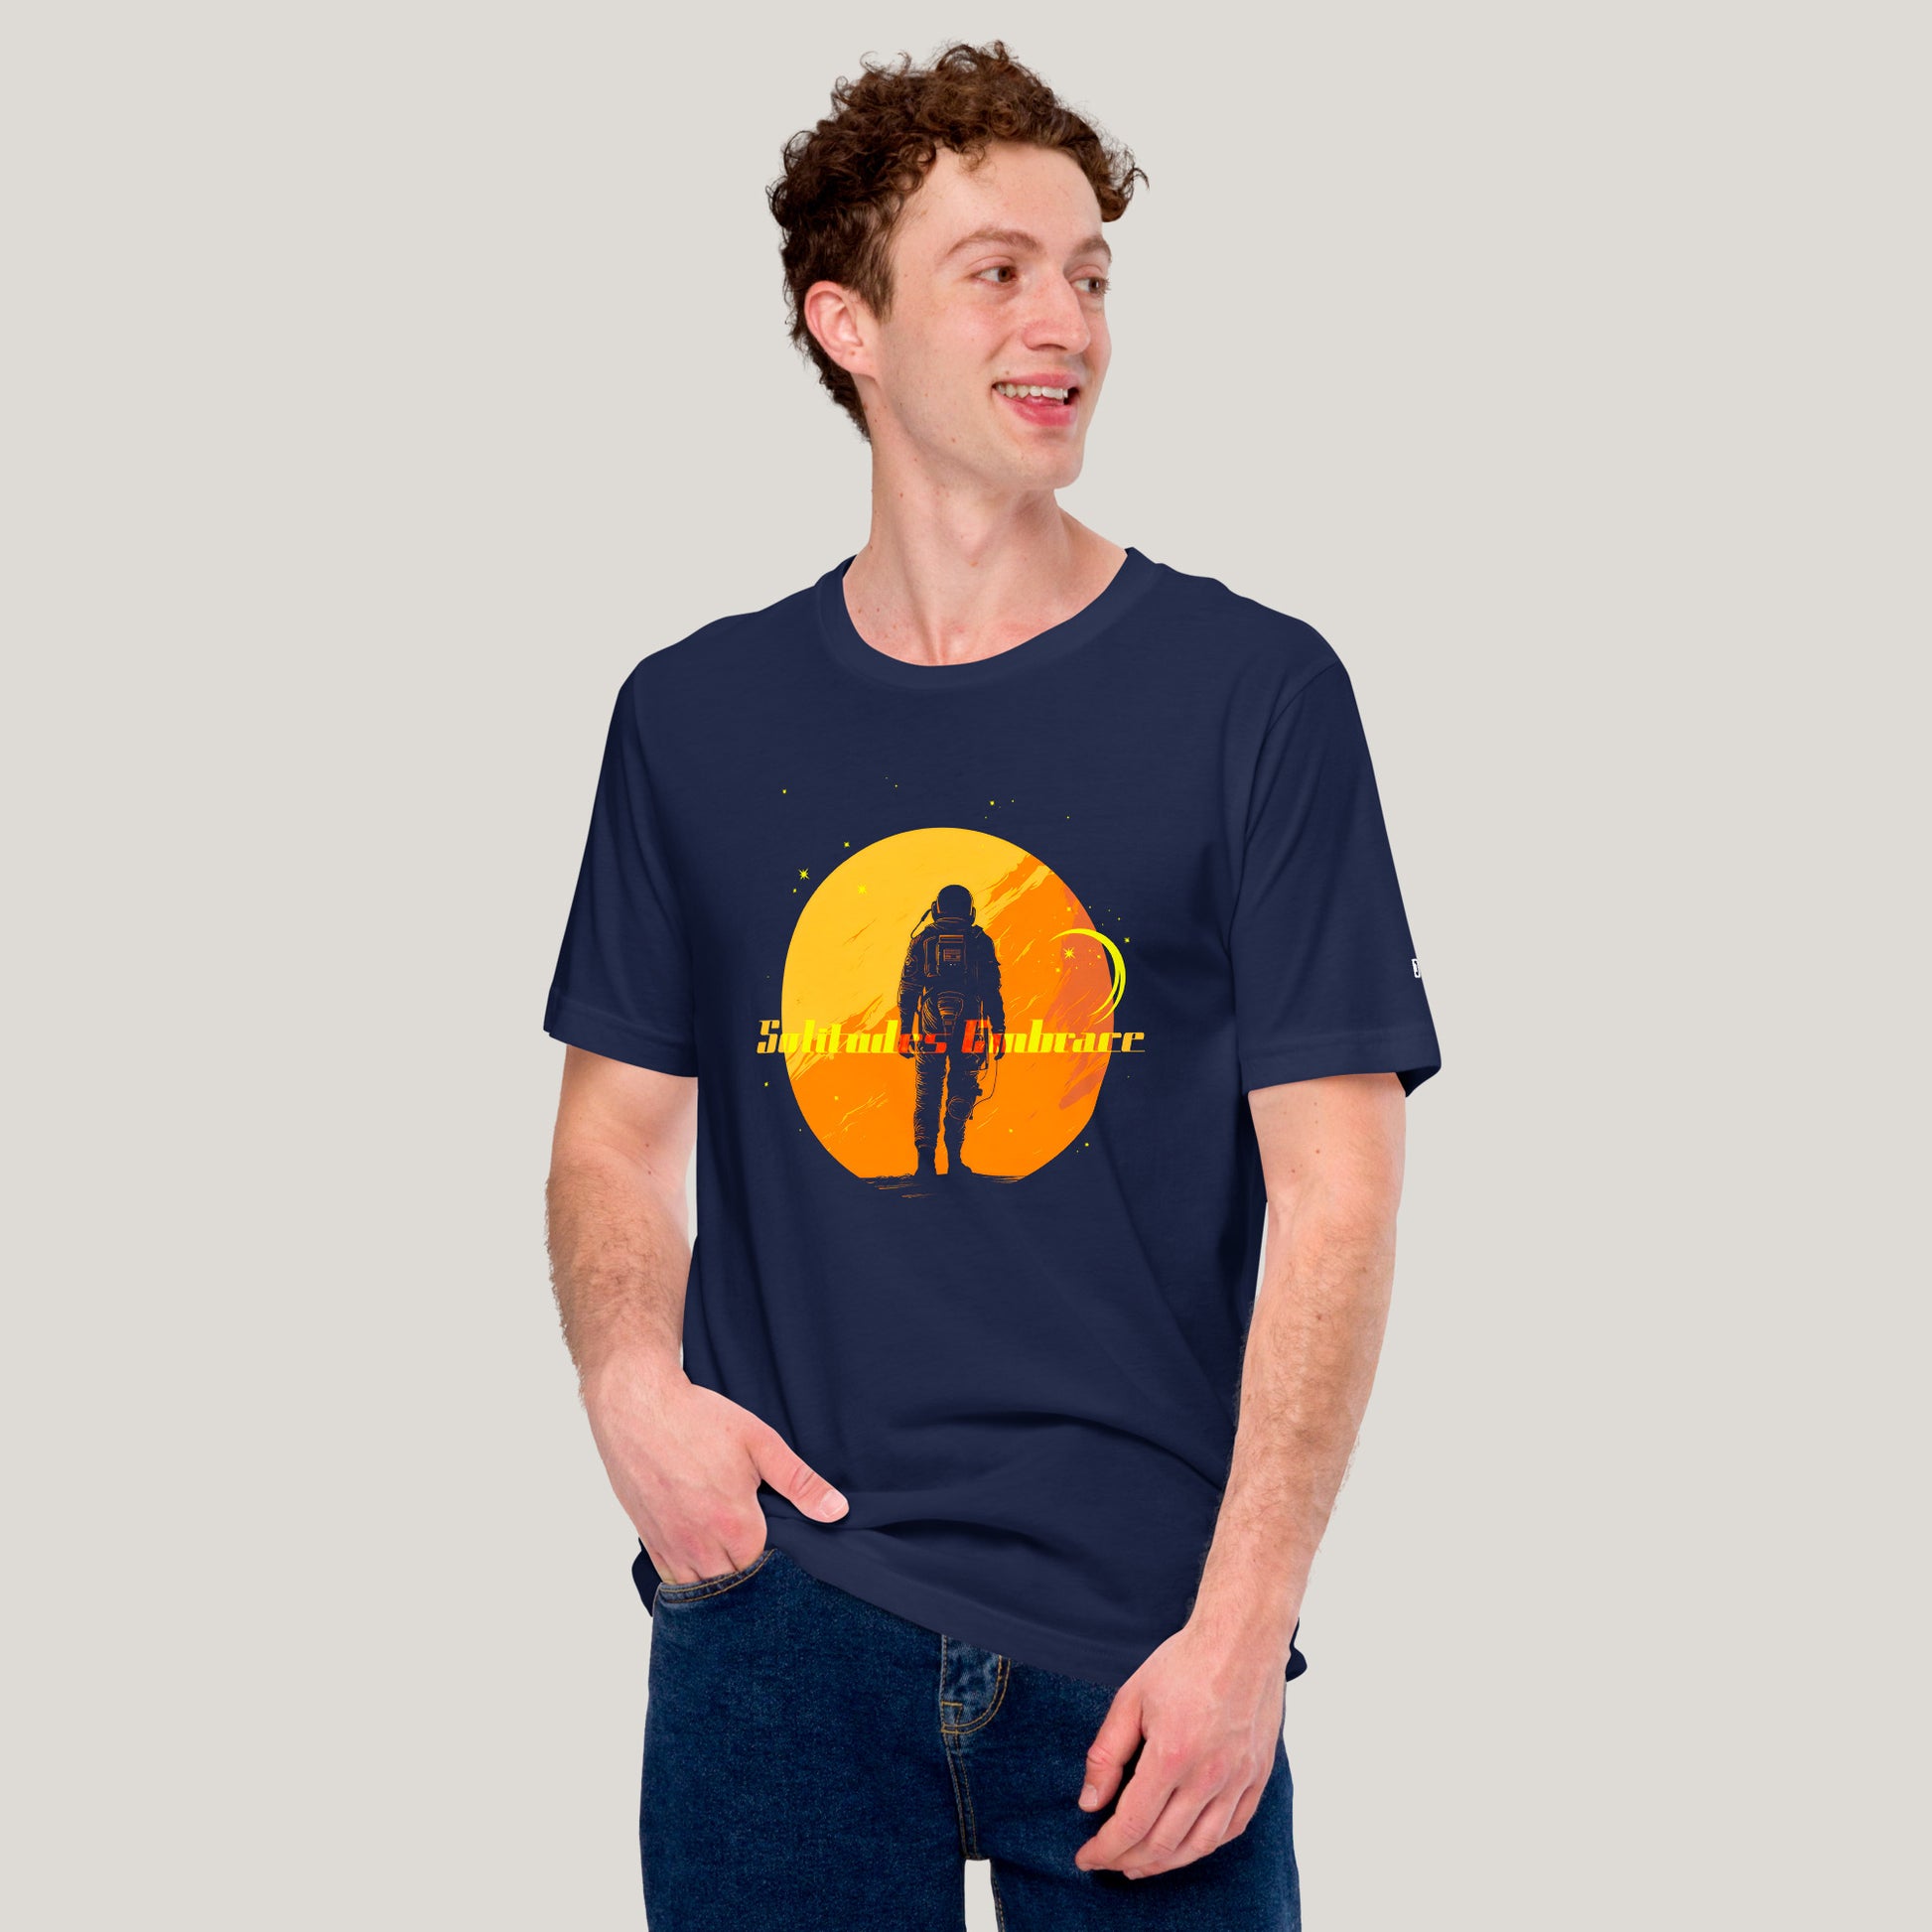  Solitudes Embrace Unisex t-shirt- in midnight navy- worn by model